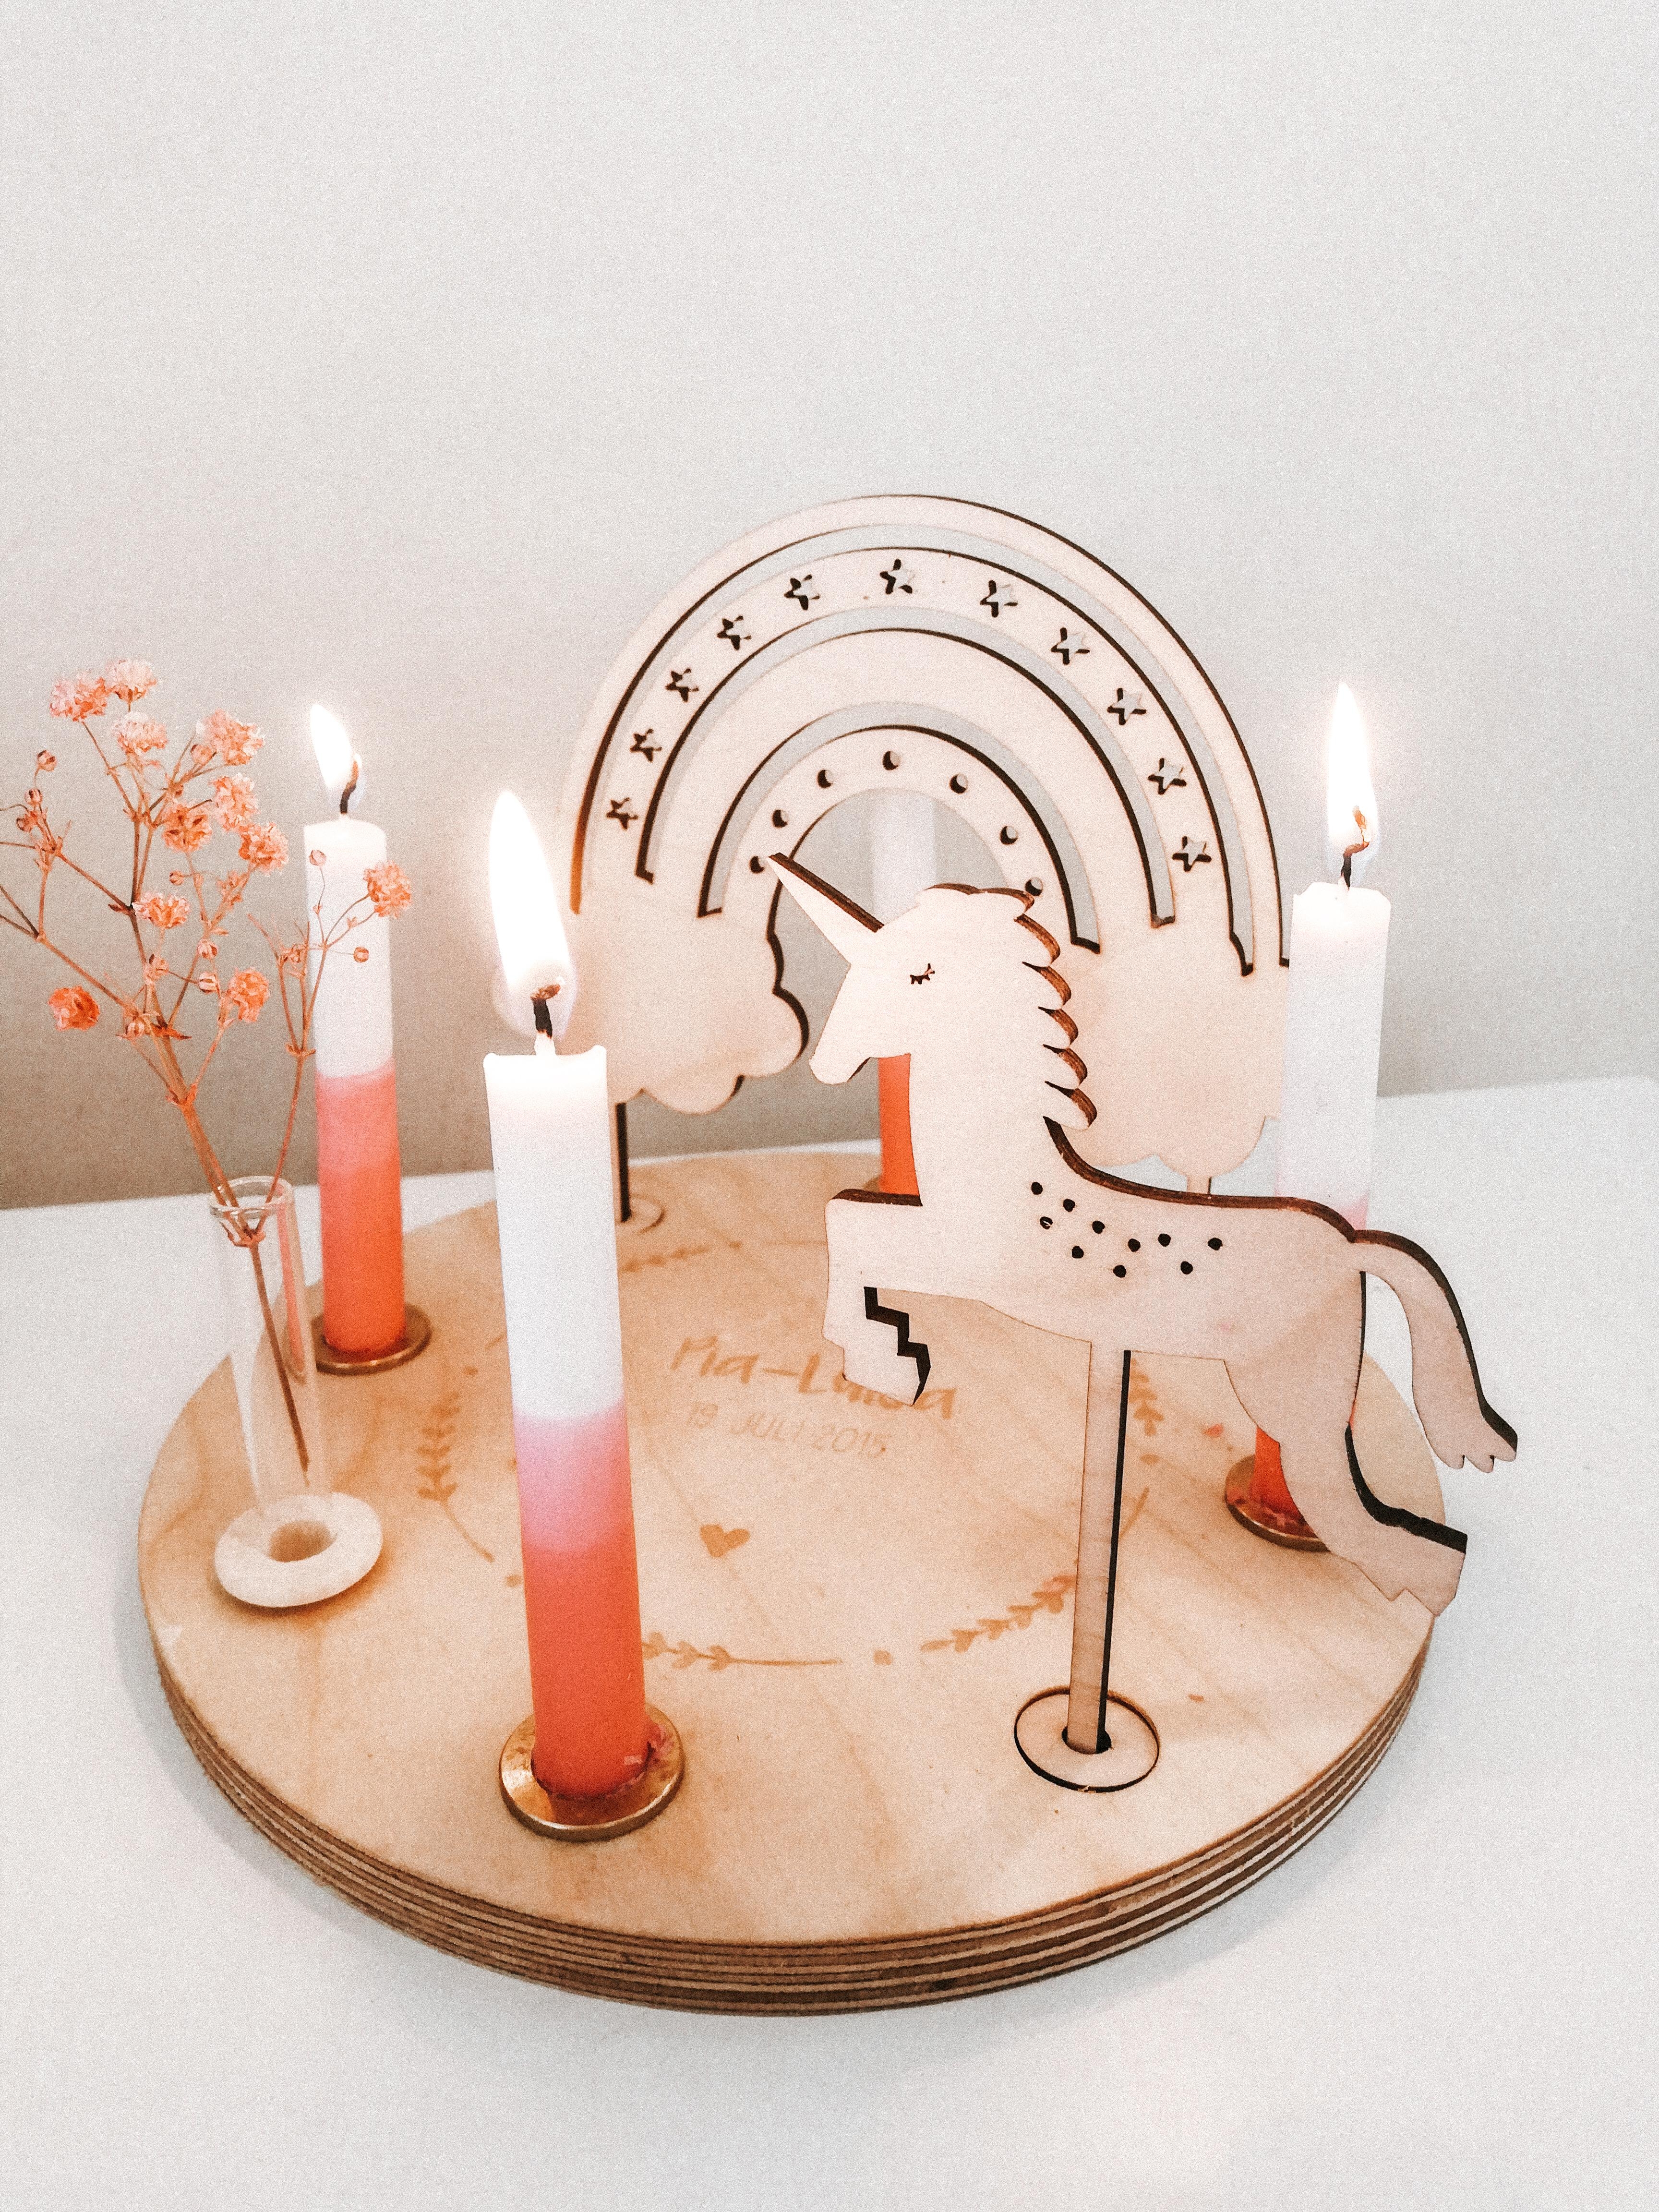 Einhorn Geburtstag 😍
#unicorn #birthdaygirl #birthdayparty #holz #holzliebe #neuhier 